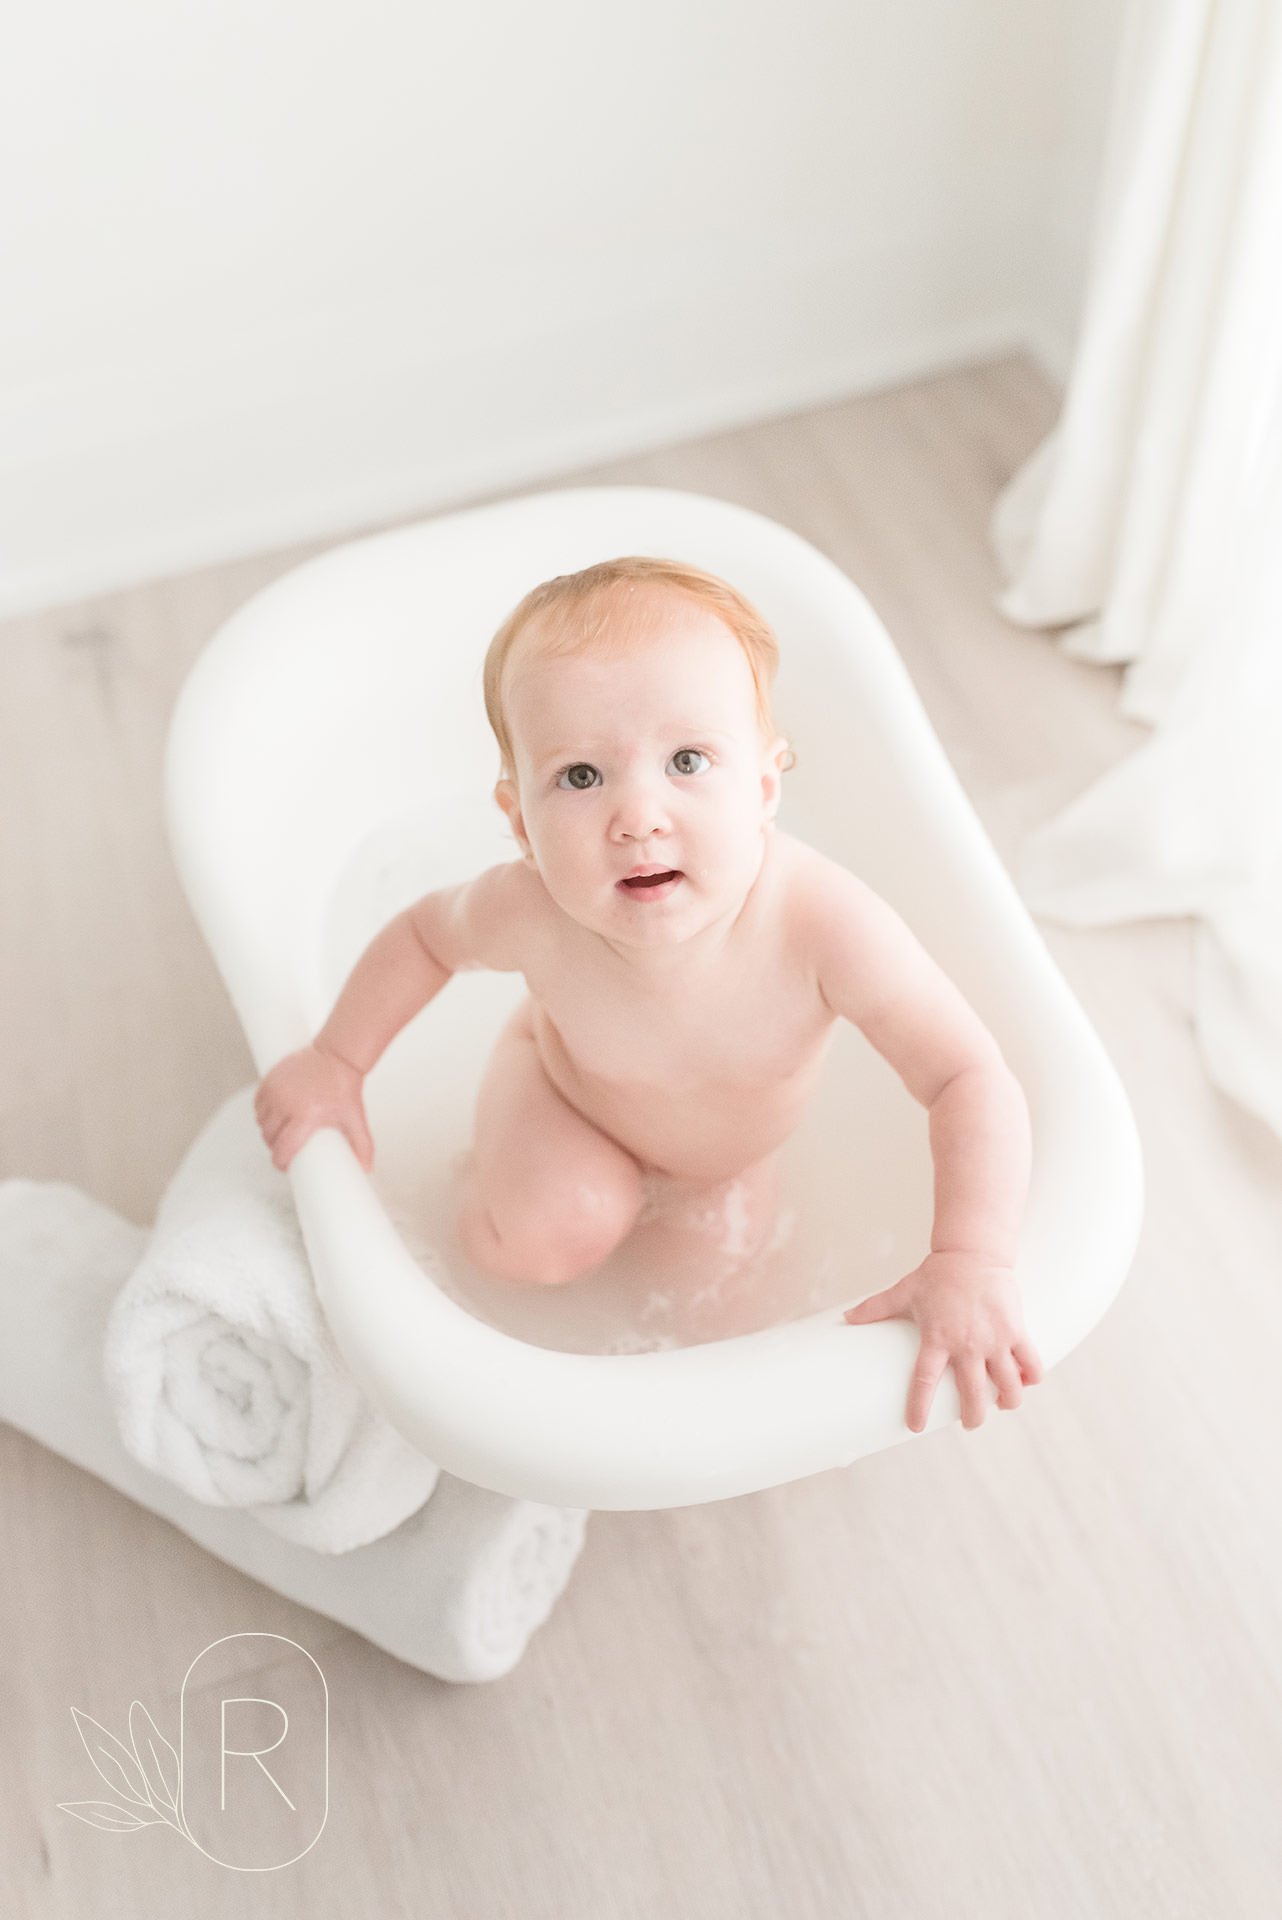 Baby girl looking at the camera in the bubble bath Niagara Ontario photo studio